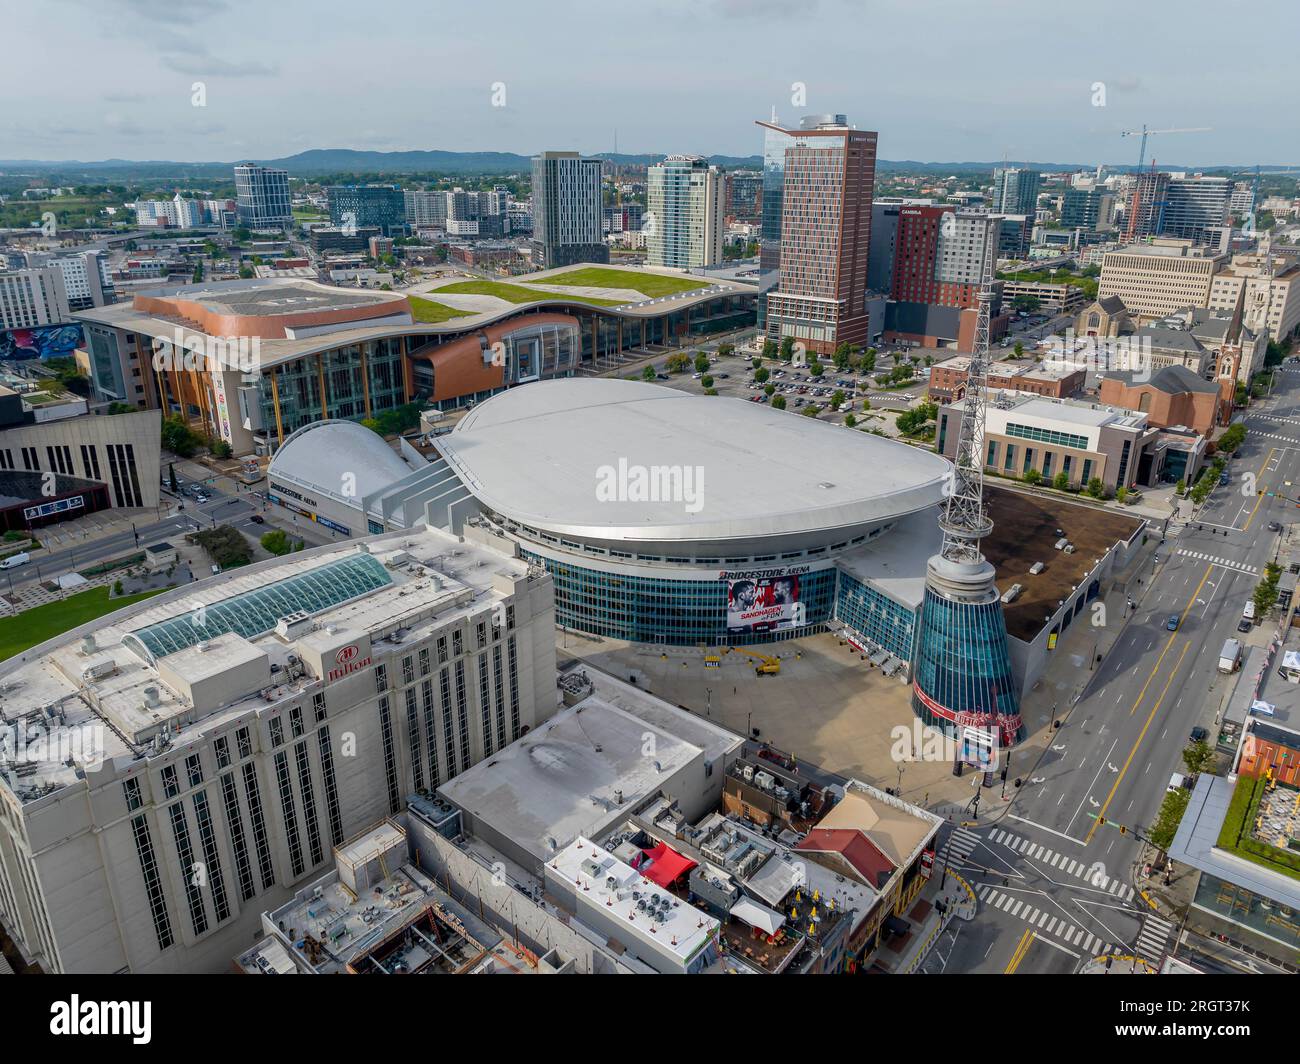 Nashville Predators Panoramic Picture - Bridgestone Arena